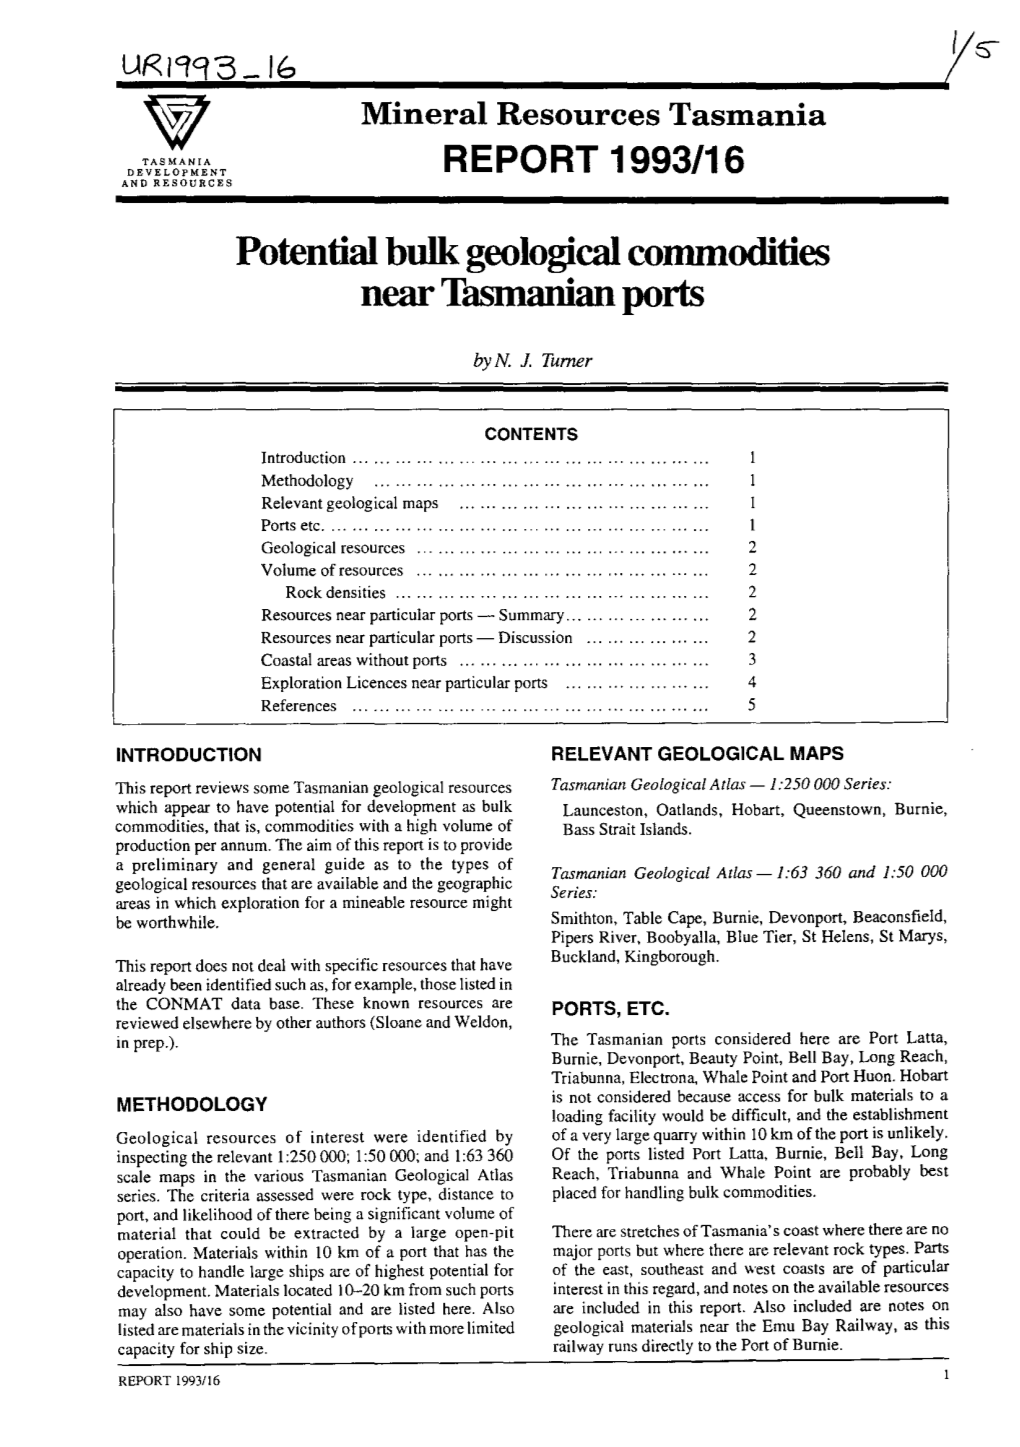 Potential Bulk Geological Commodities Near Tasmanian Ports